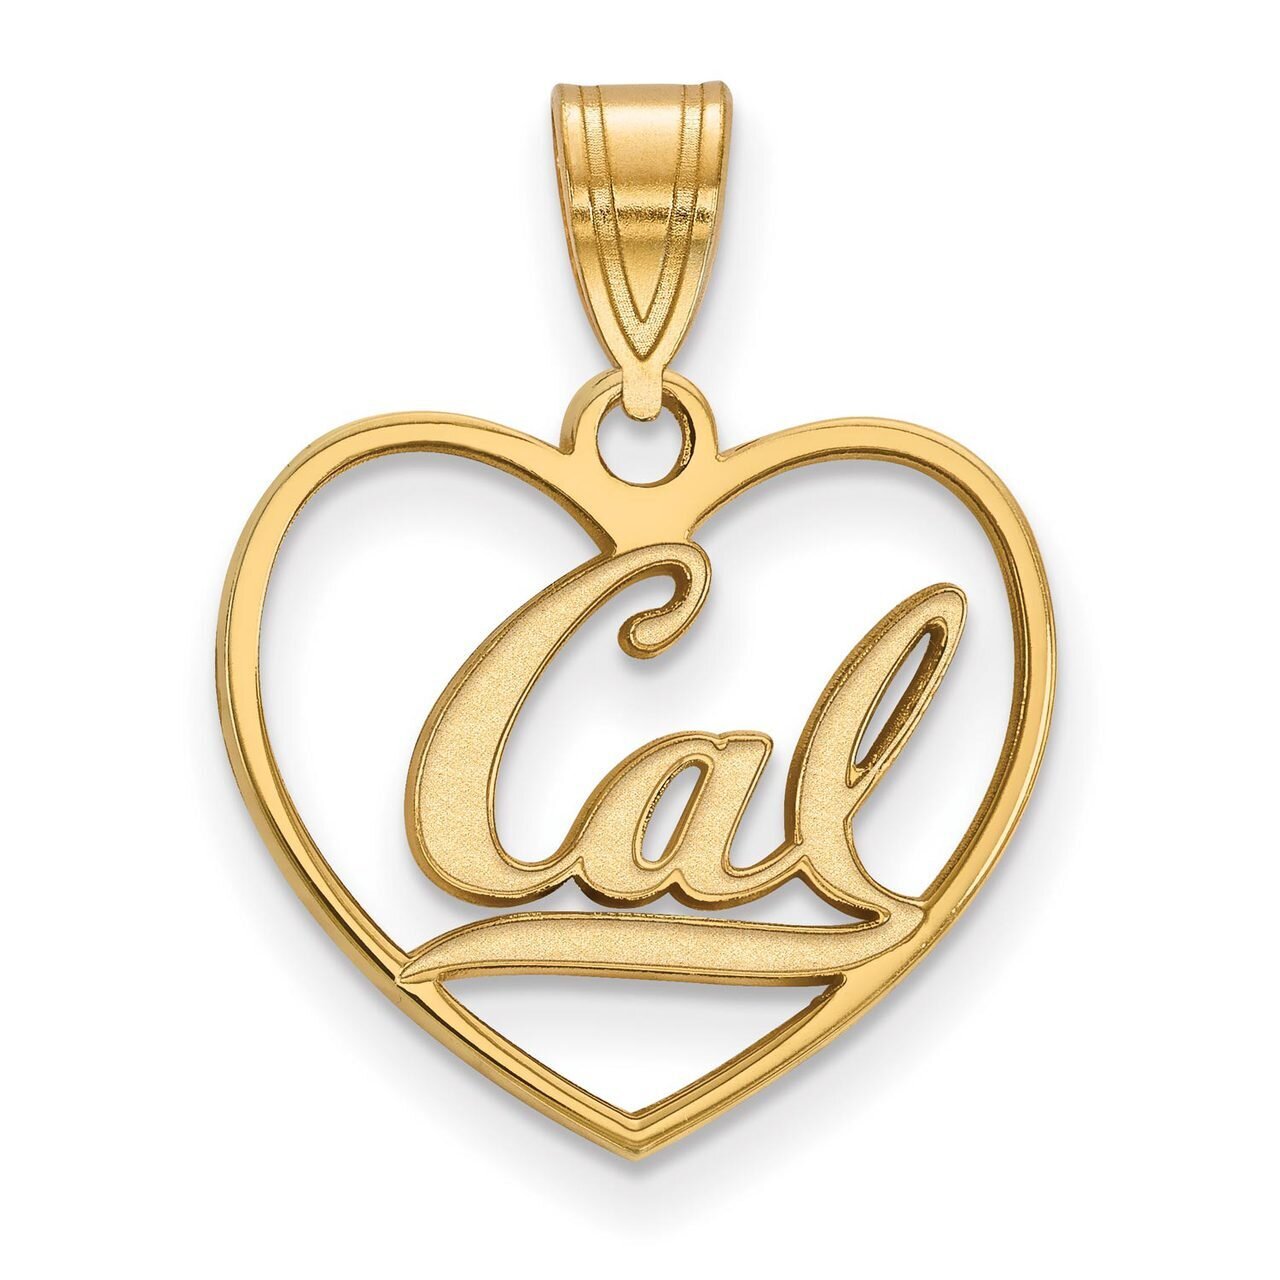 University of California Berkeley Pendant in Heart Gold-plated Silver GP013UCB